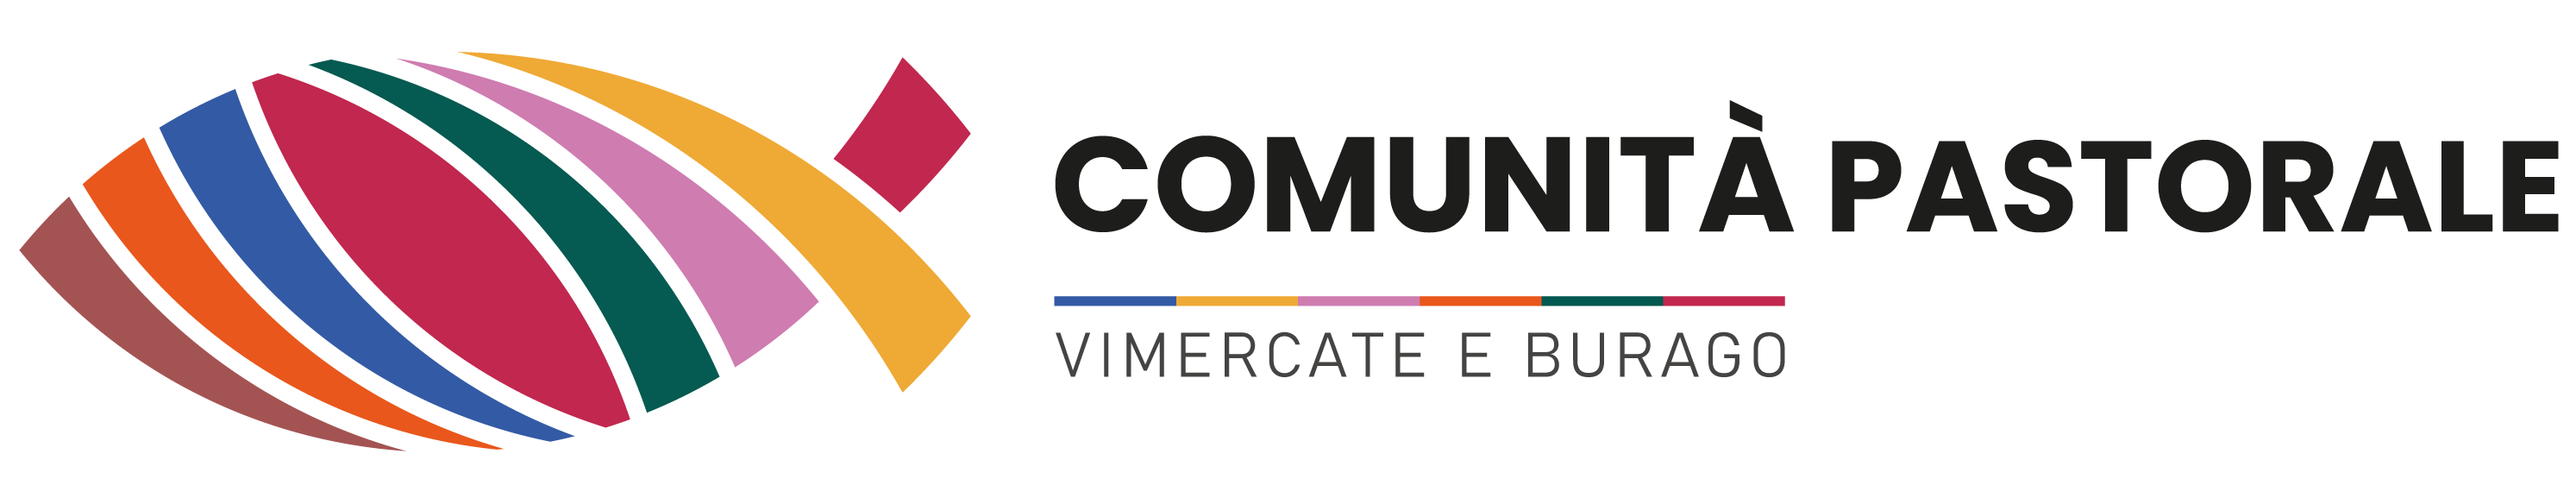 Logo Comunità Pastorale Vimercate Burago